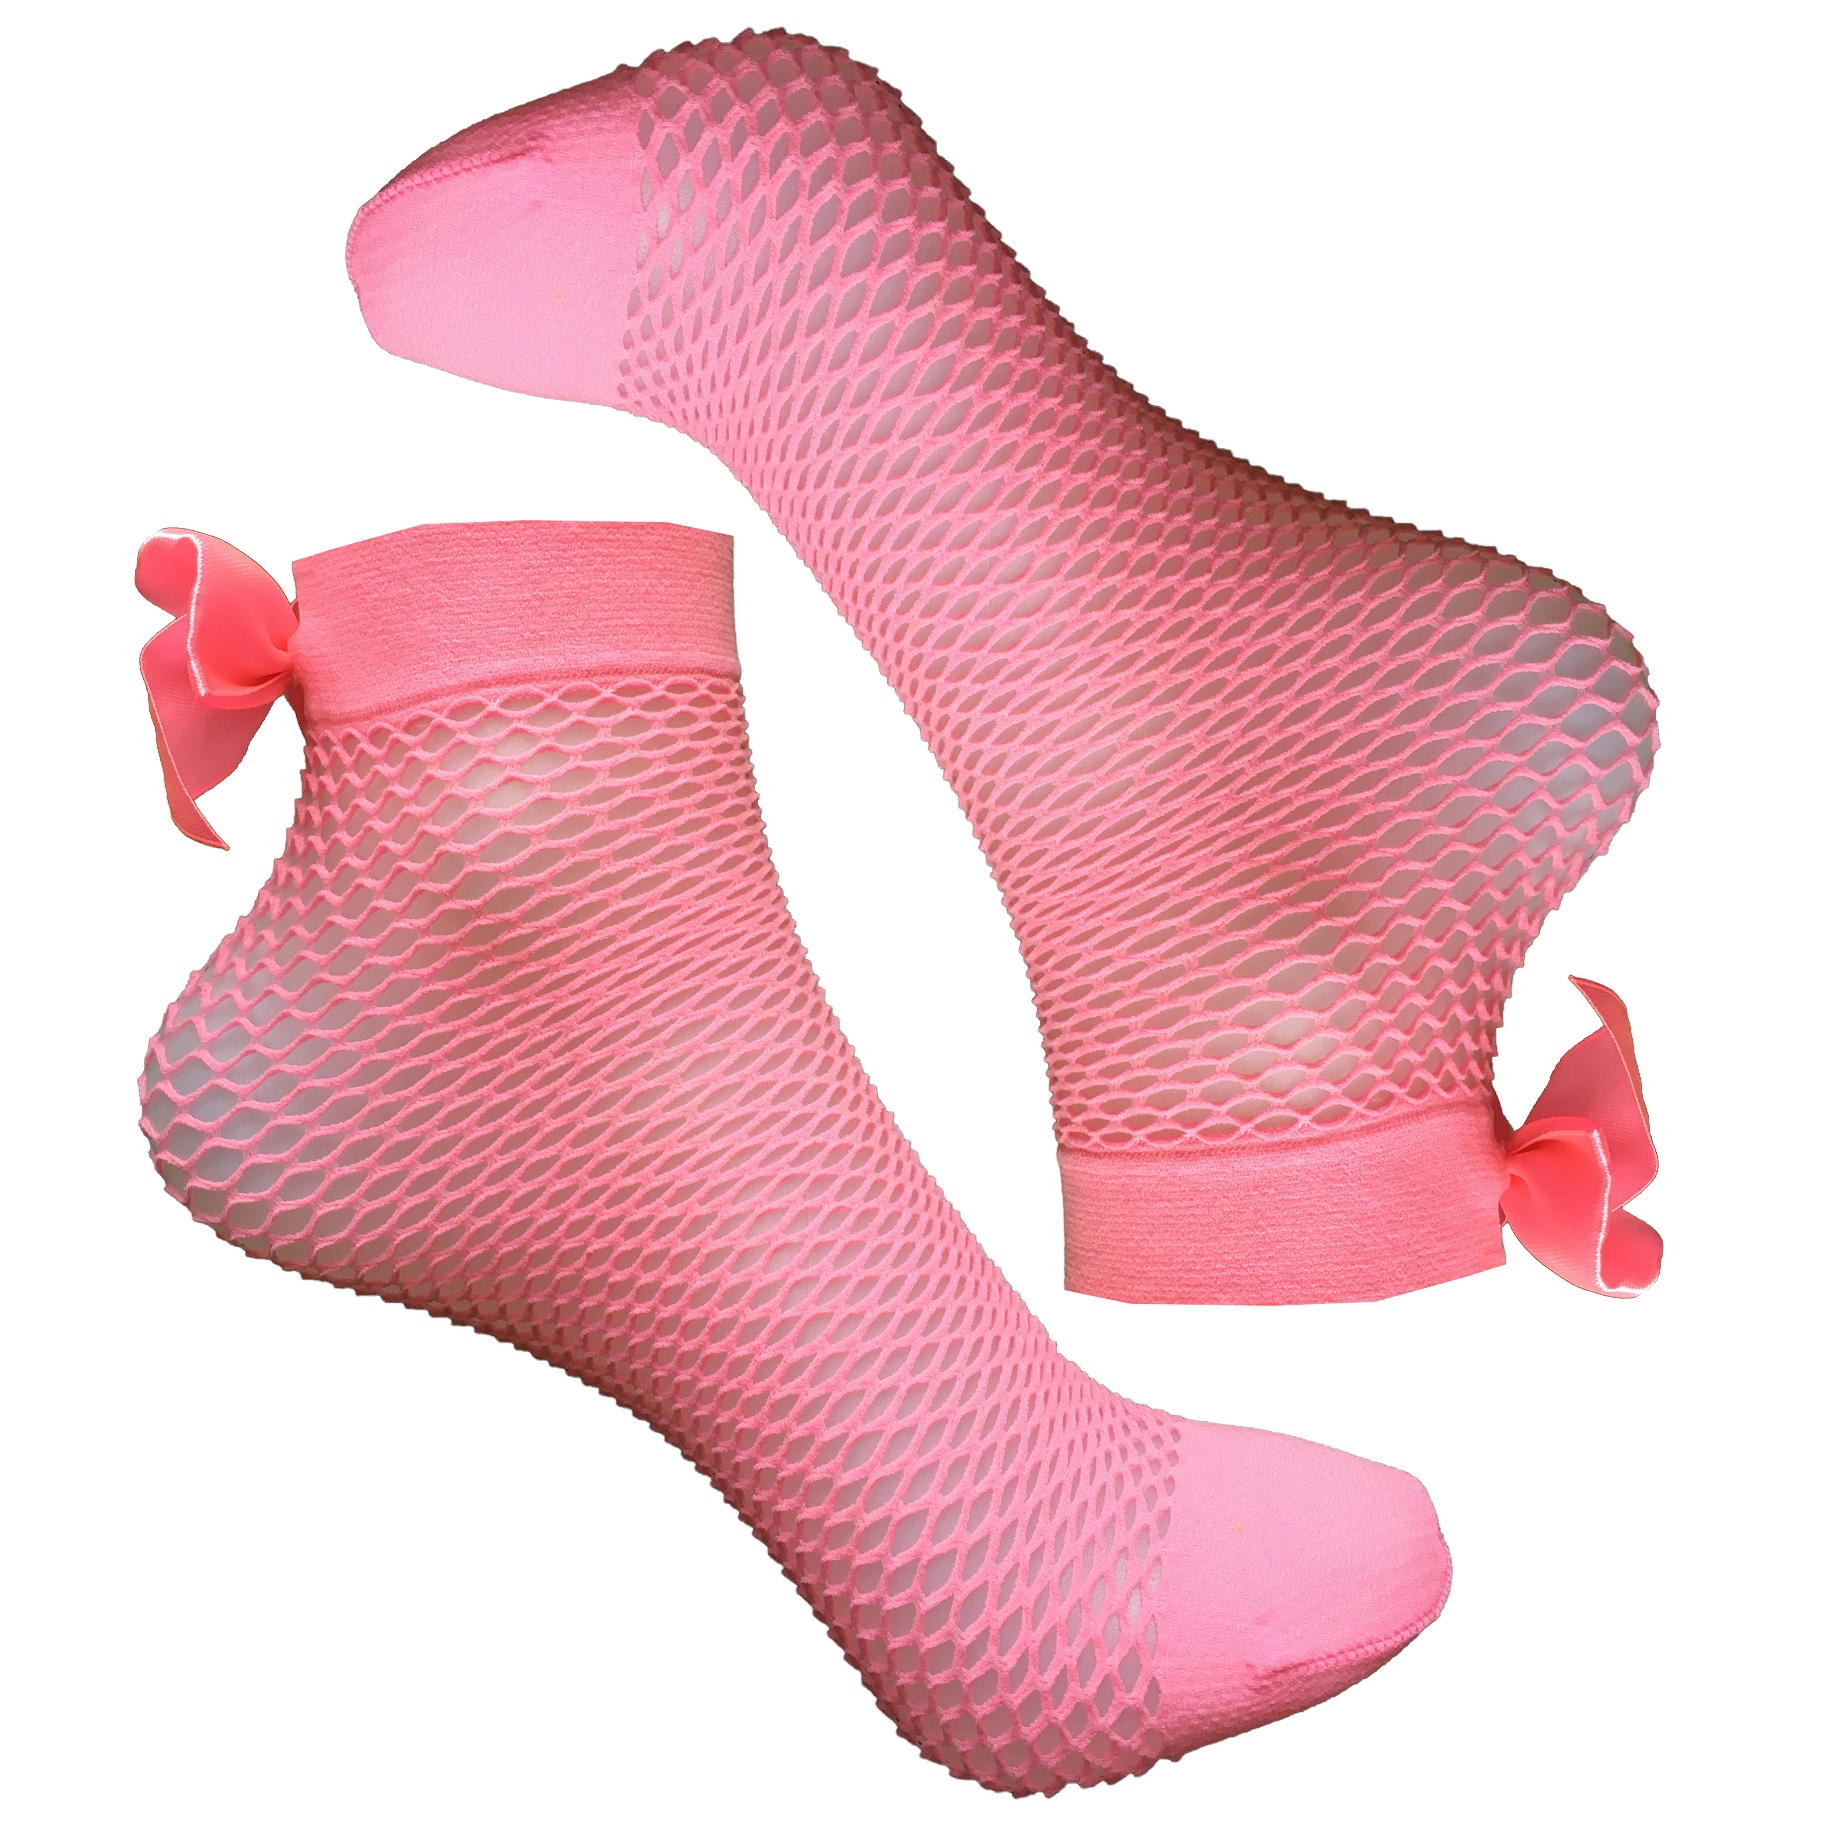 جوراب زنانه دکتر جوراب مدل فیشنت طرح پاپیون رنگ صورتی